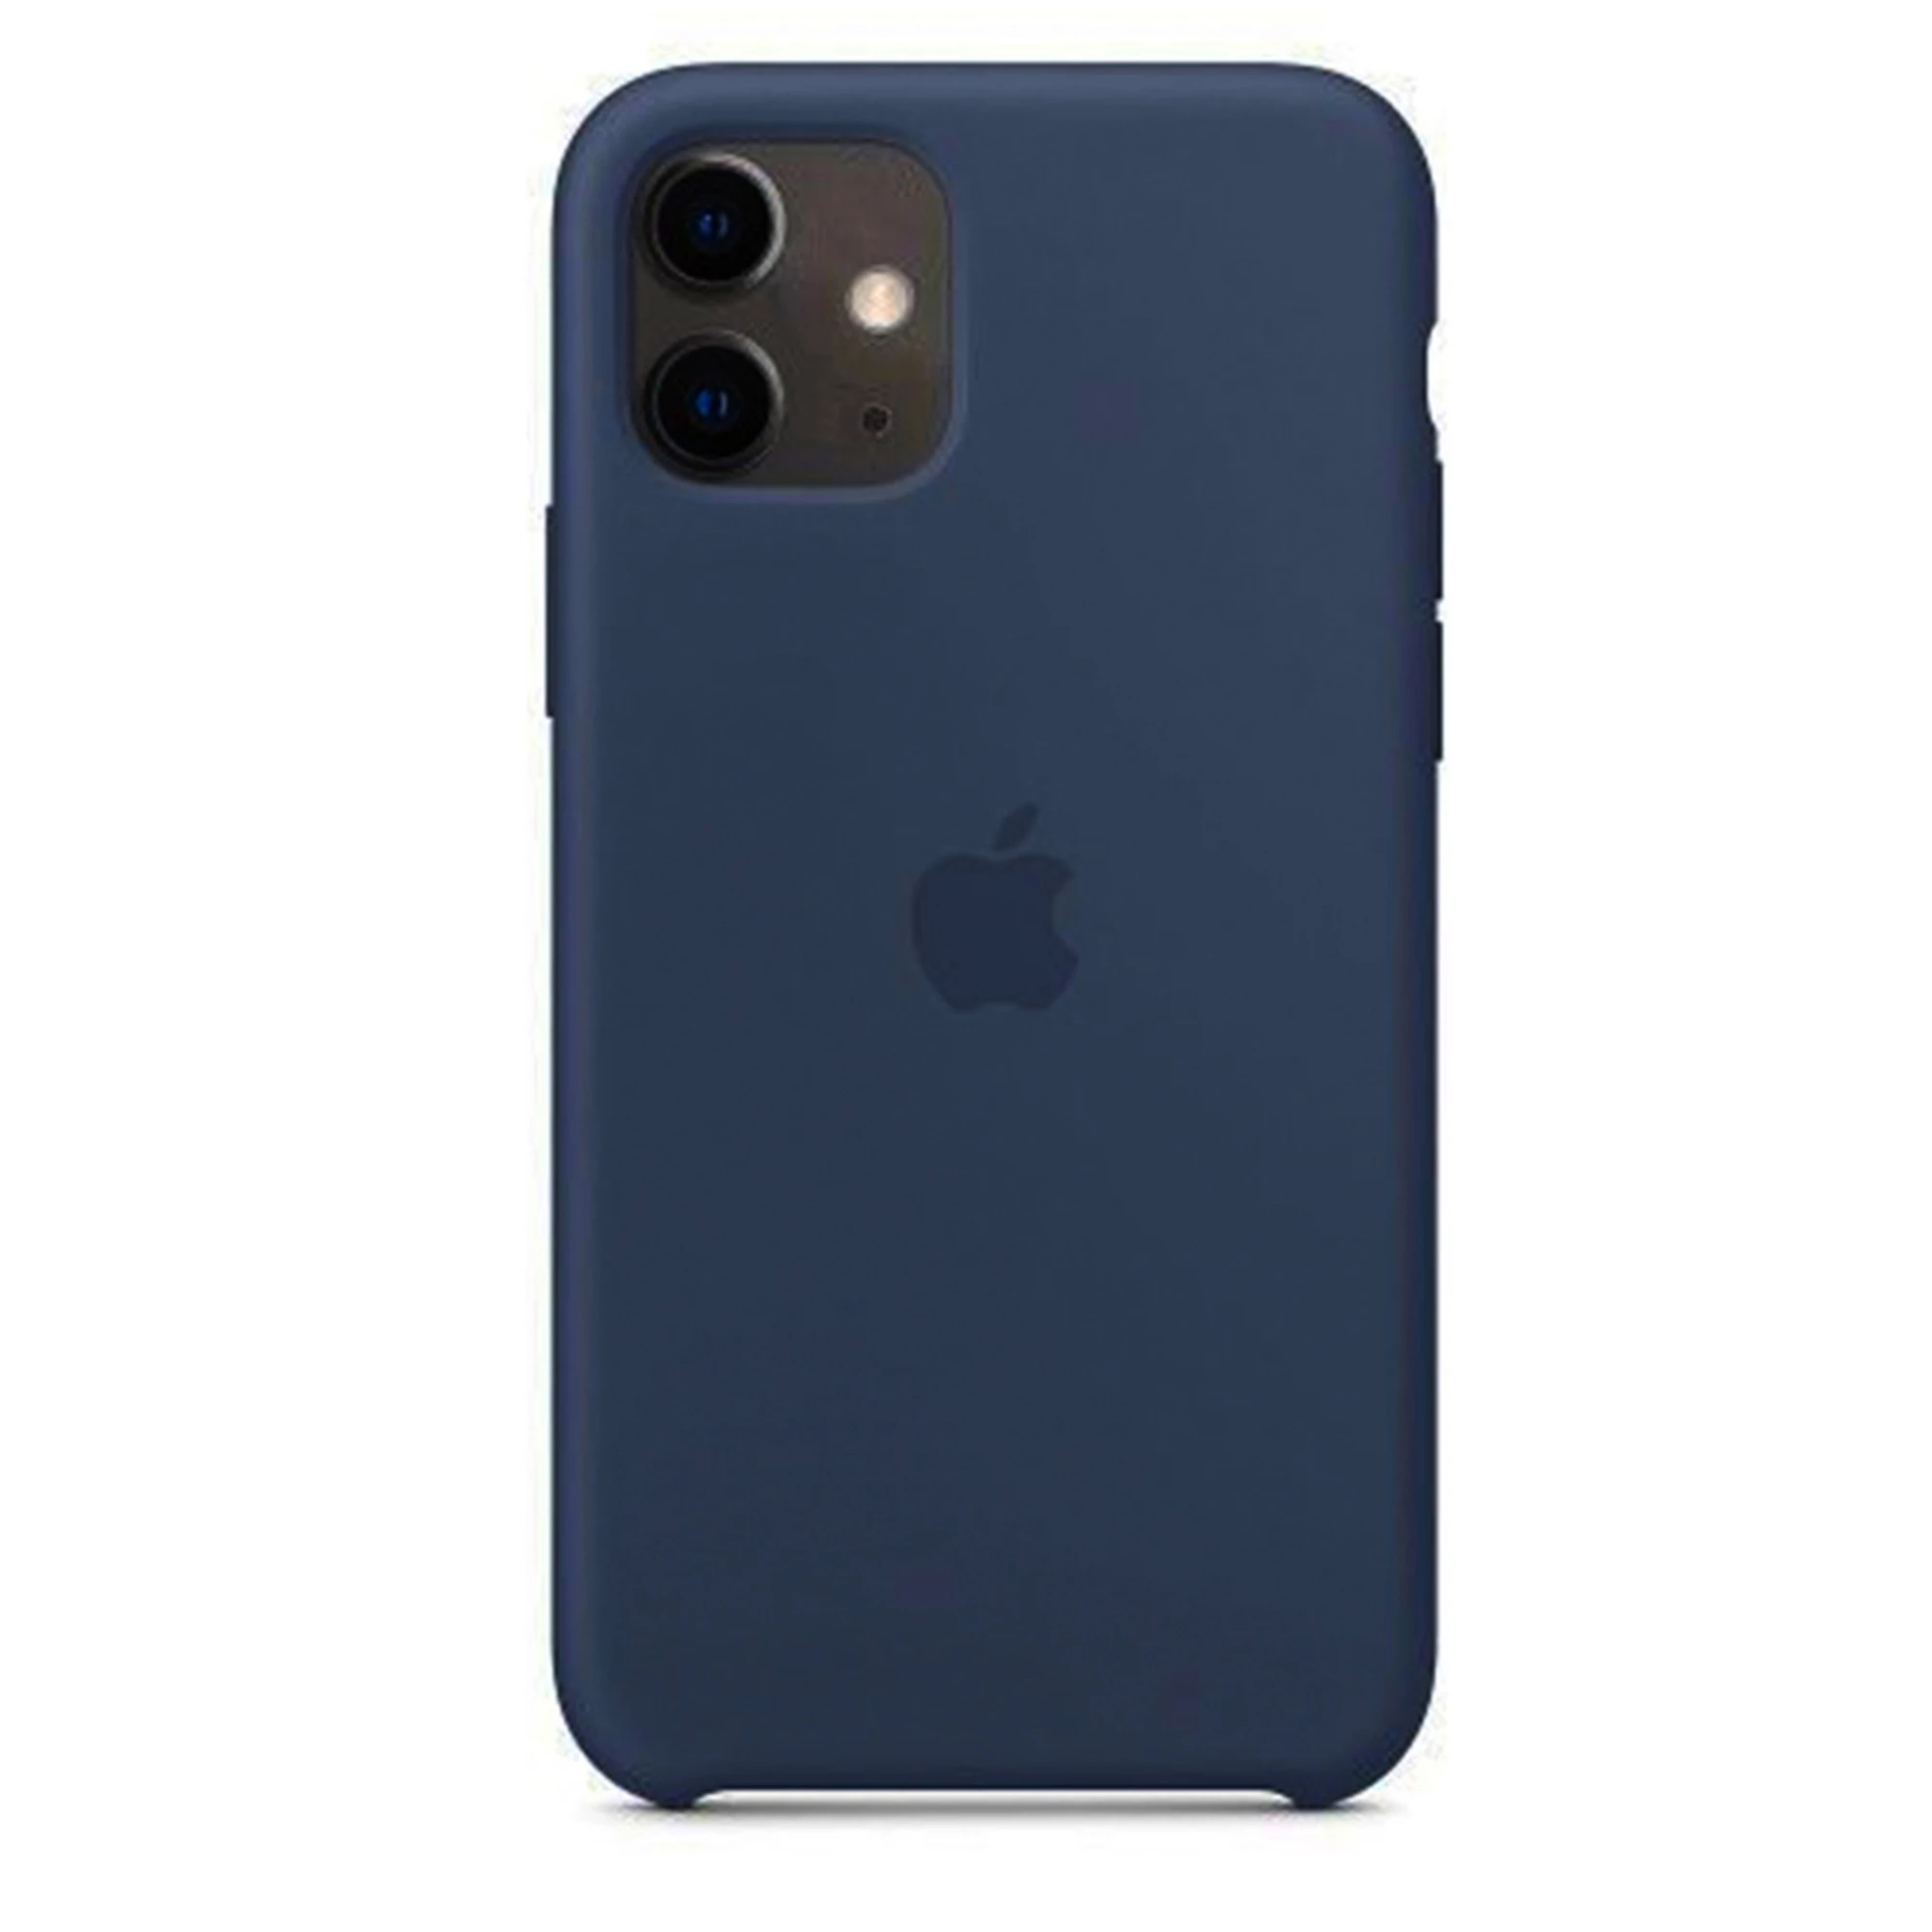 Apple iPhone 11 Silicone Case Lux Copy - Alaskan Blue (MWYV2)